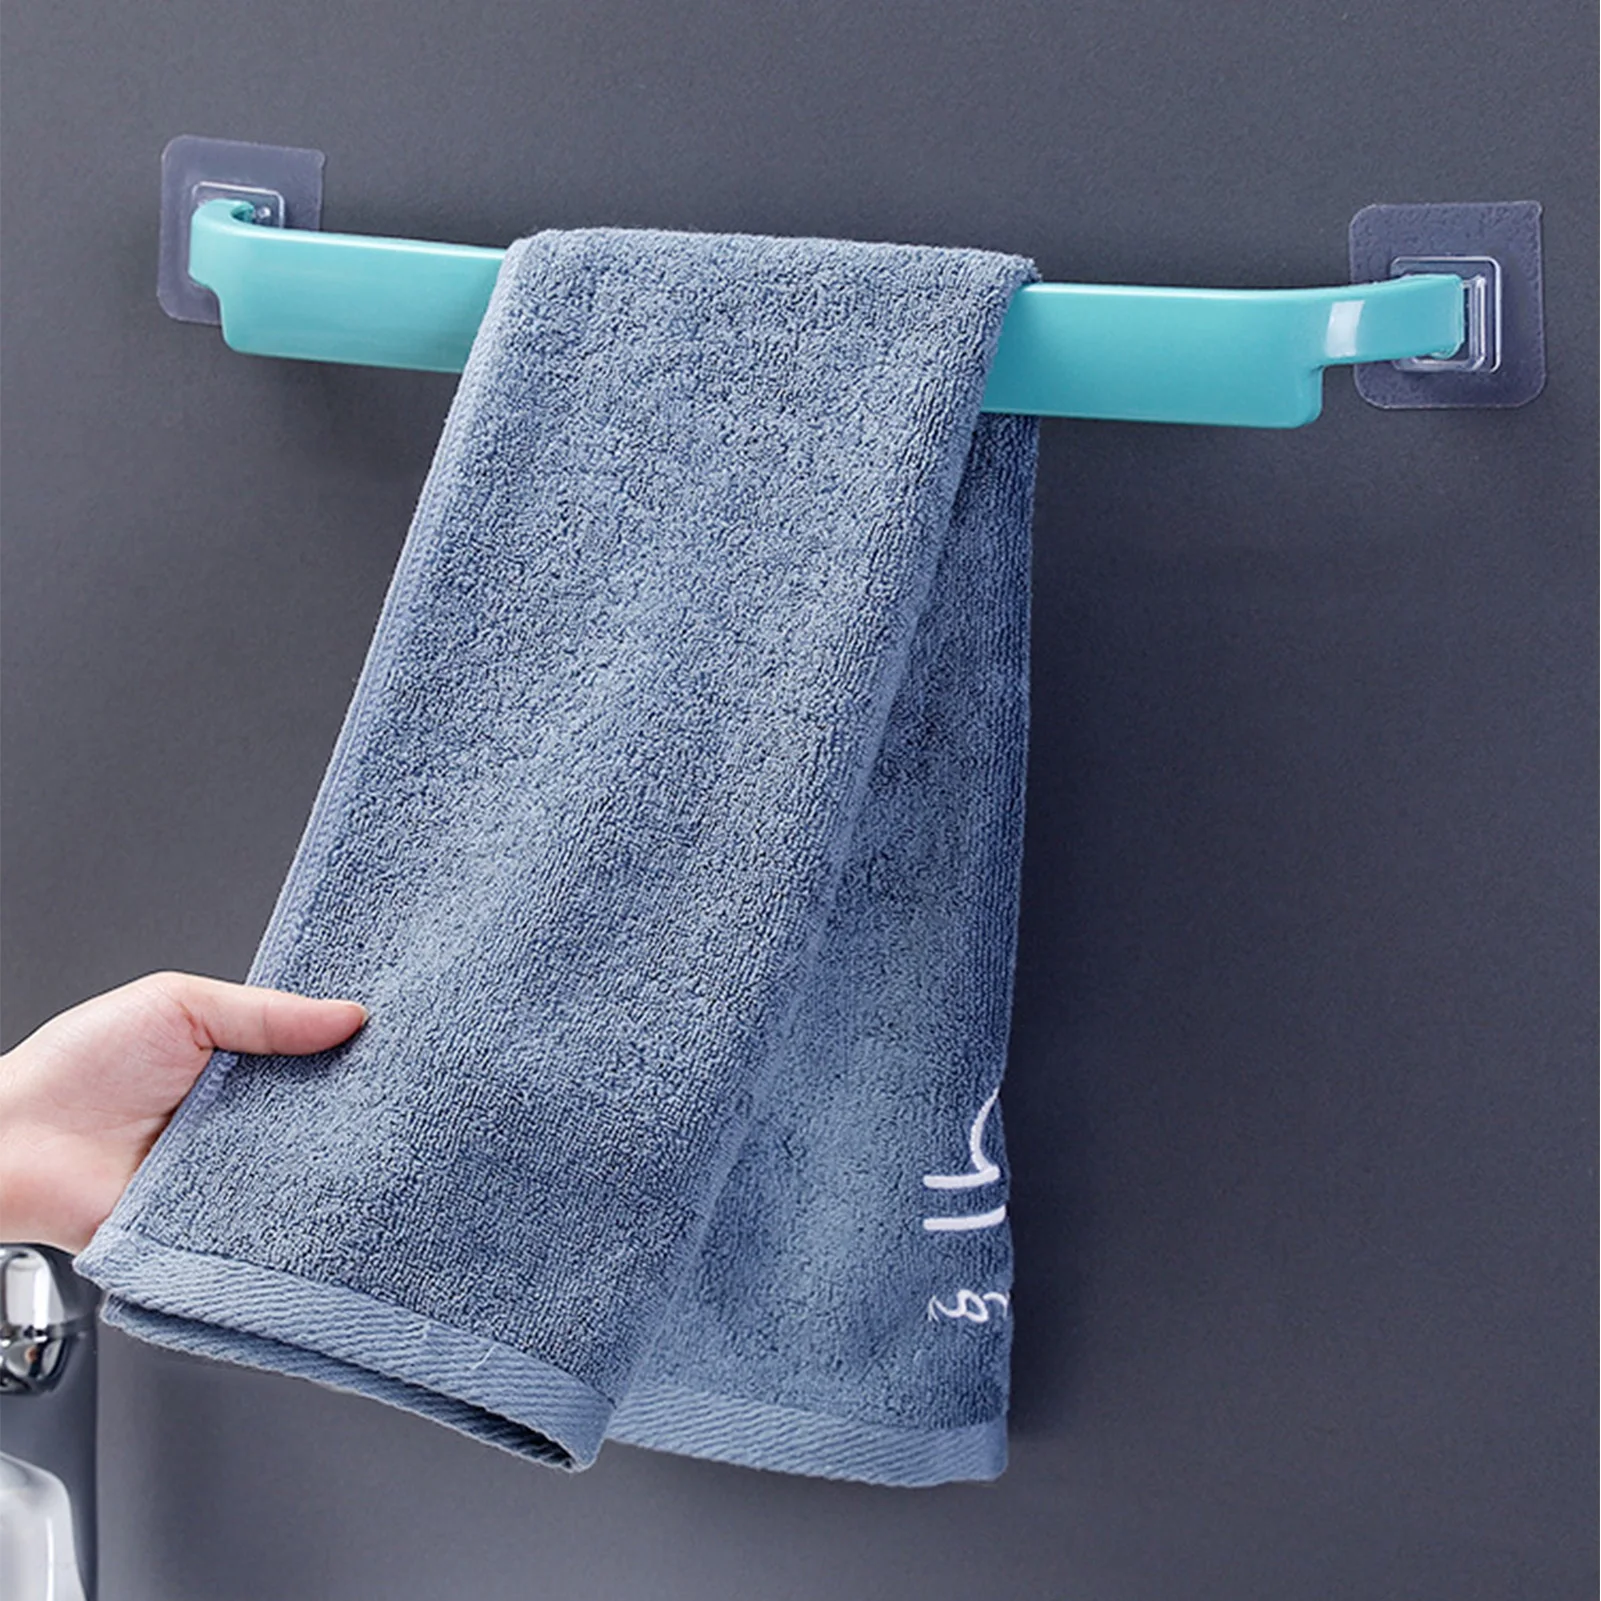 Tanio Self-Adhesive Towel Racks Wall Mounted Towel Hanger Bathroom Towel sklep